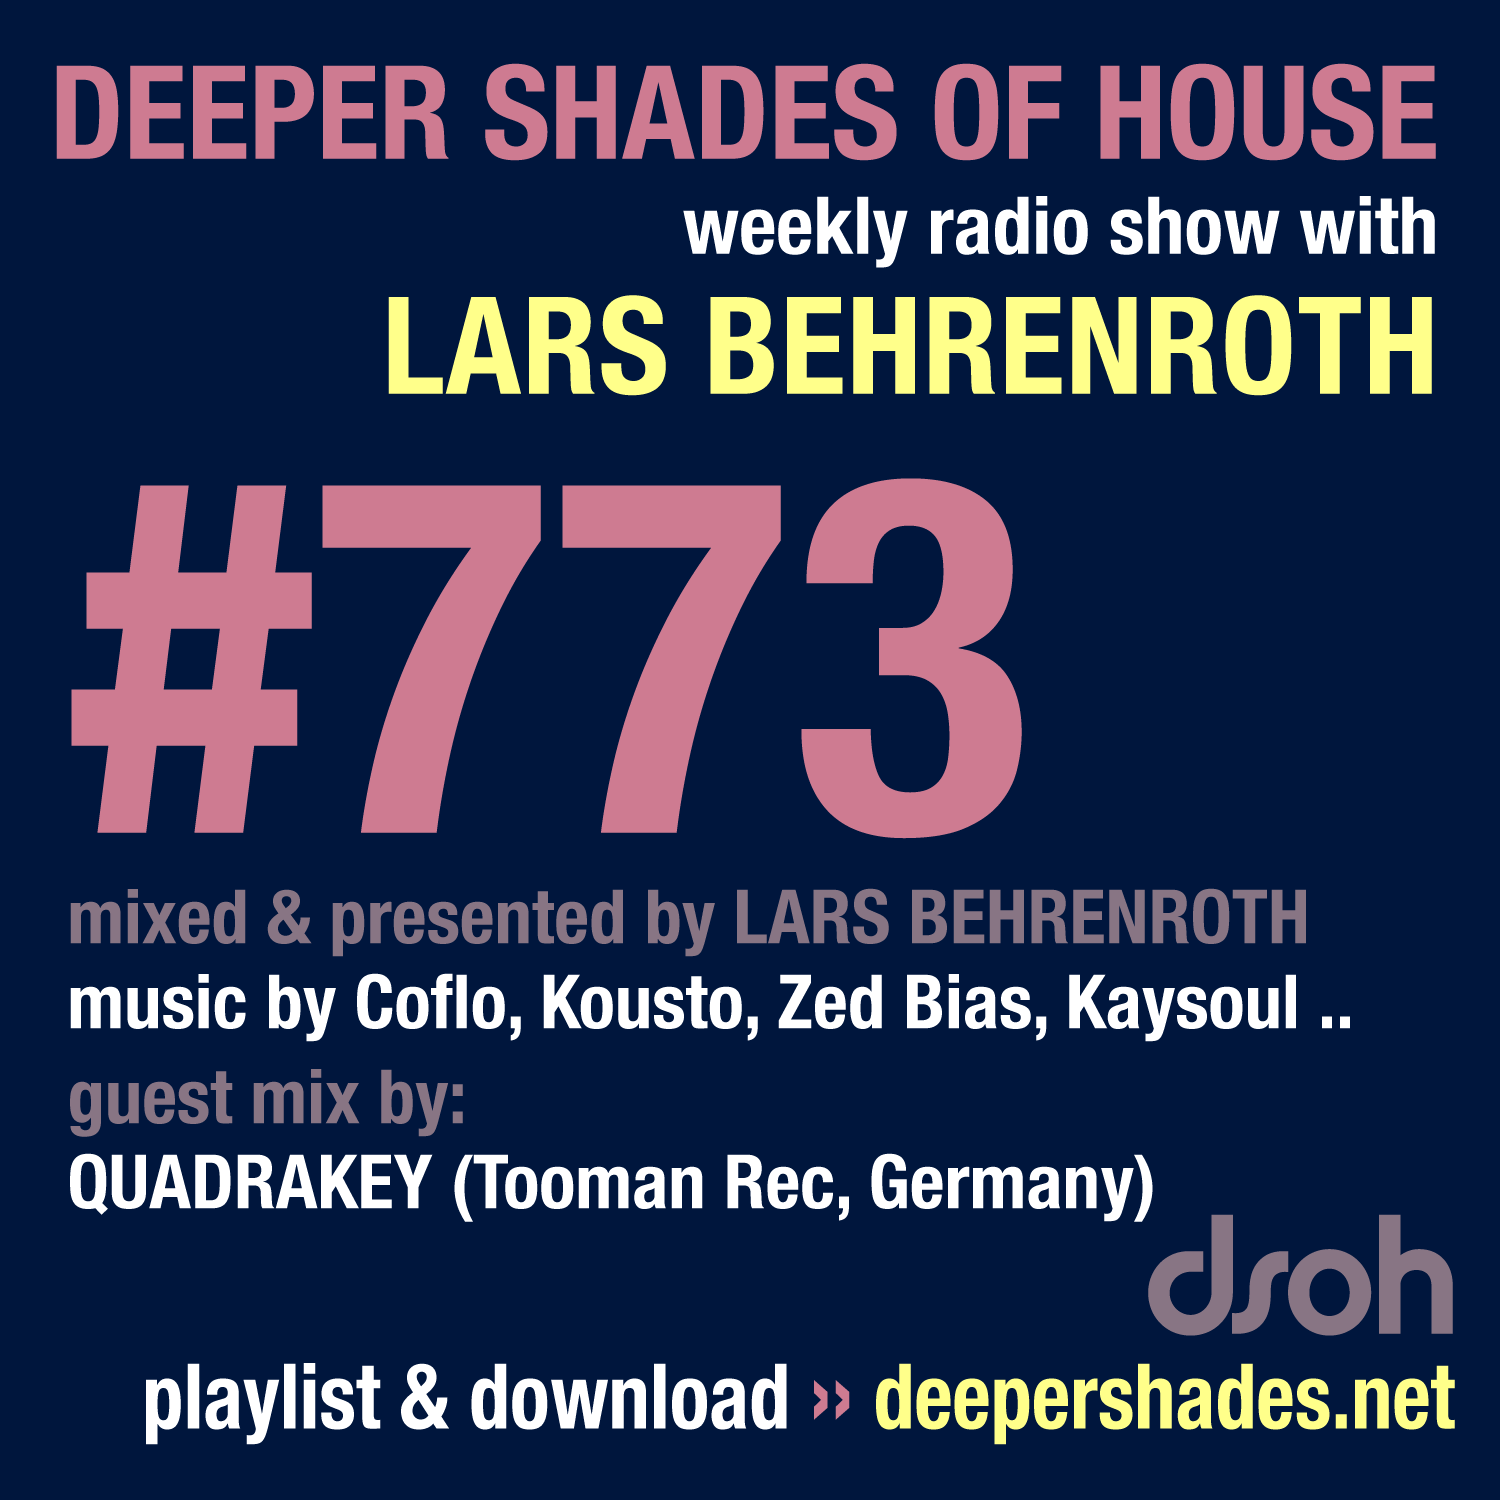 Deep House Radio Show Deeper Shades Of House 773